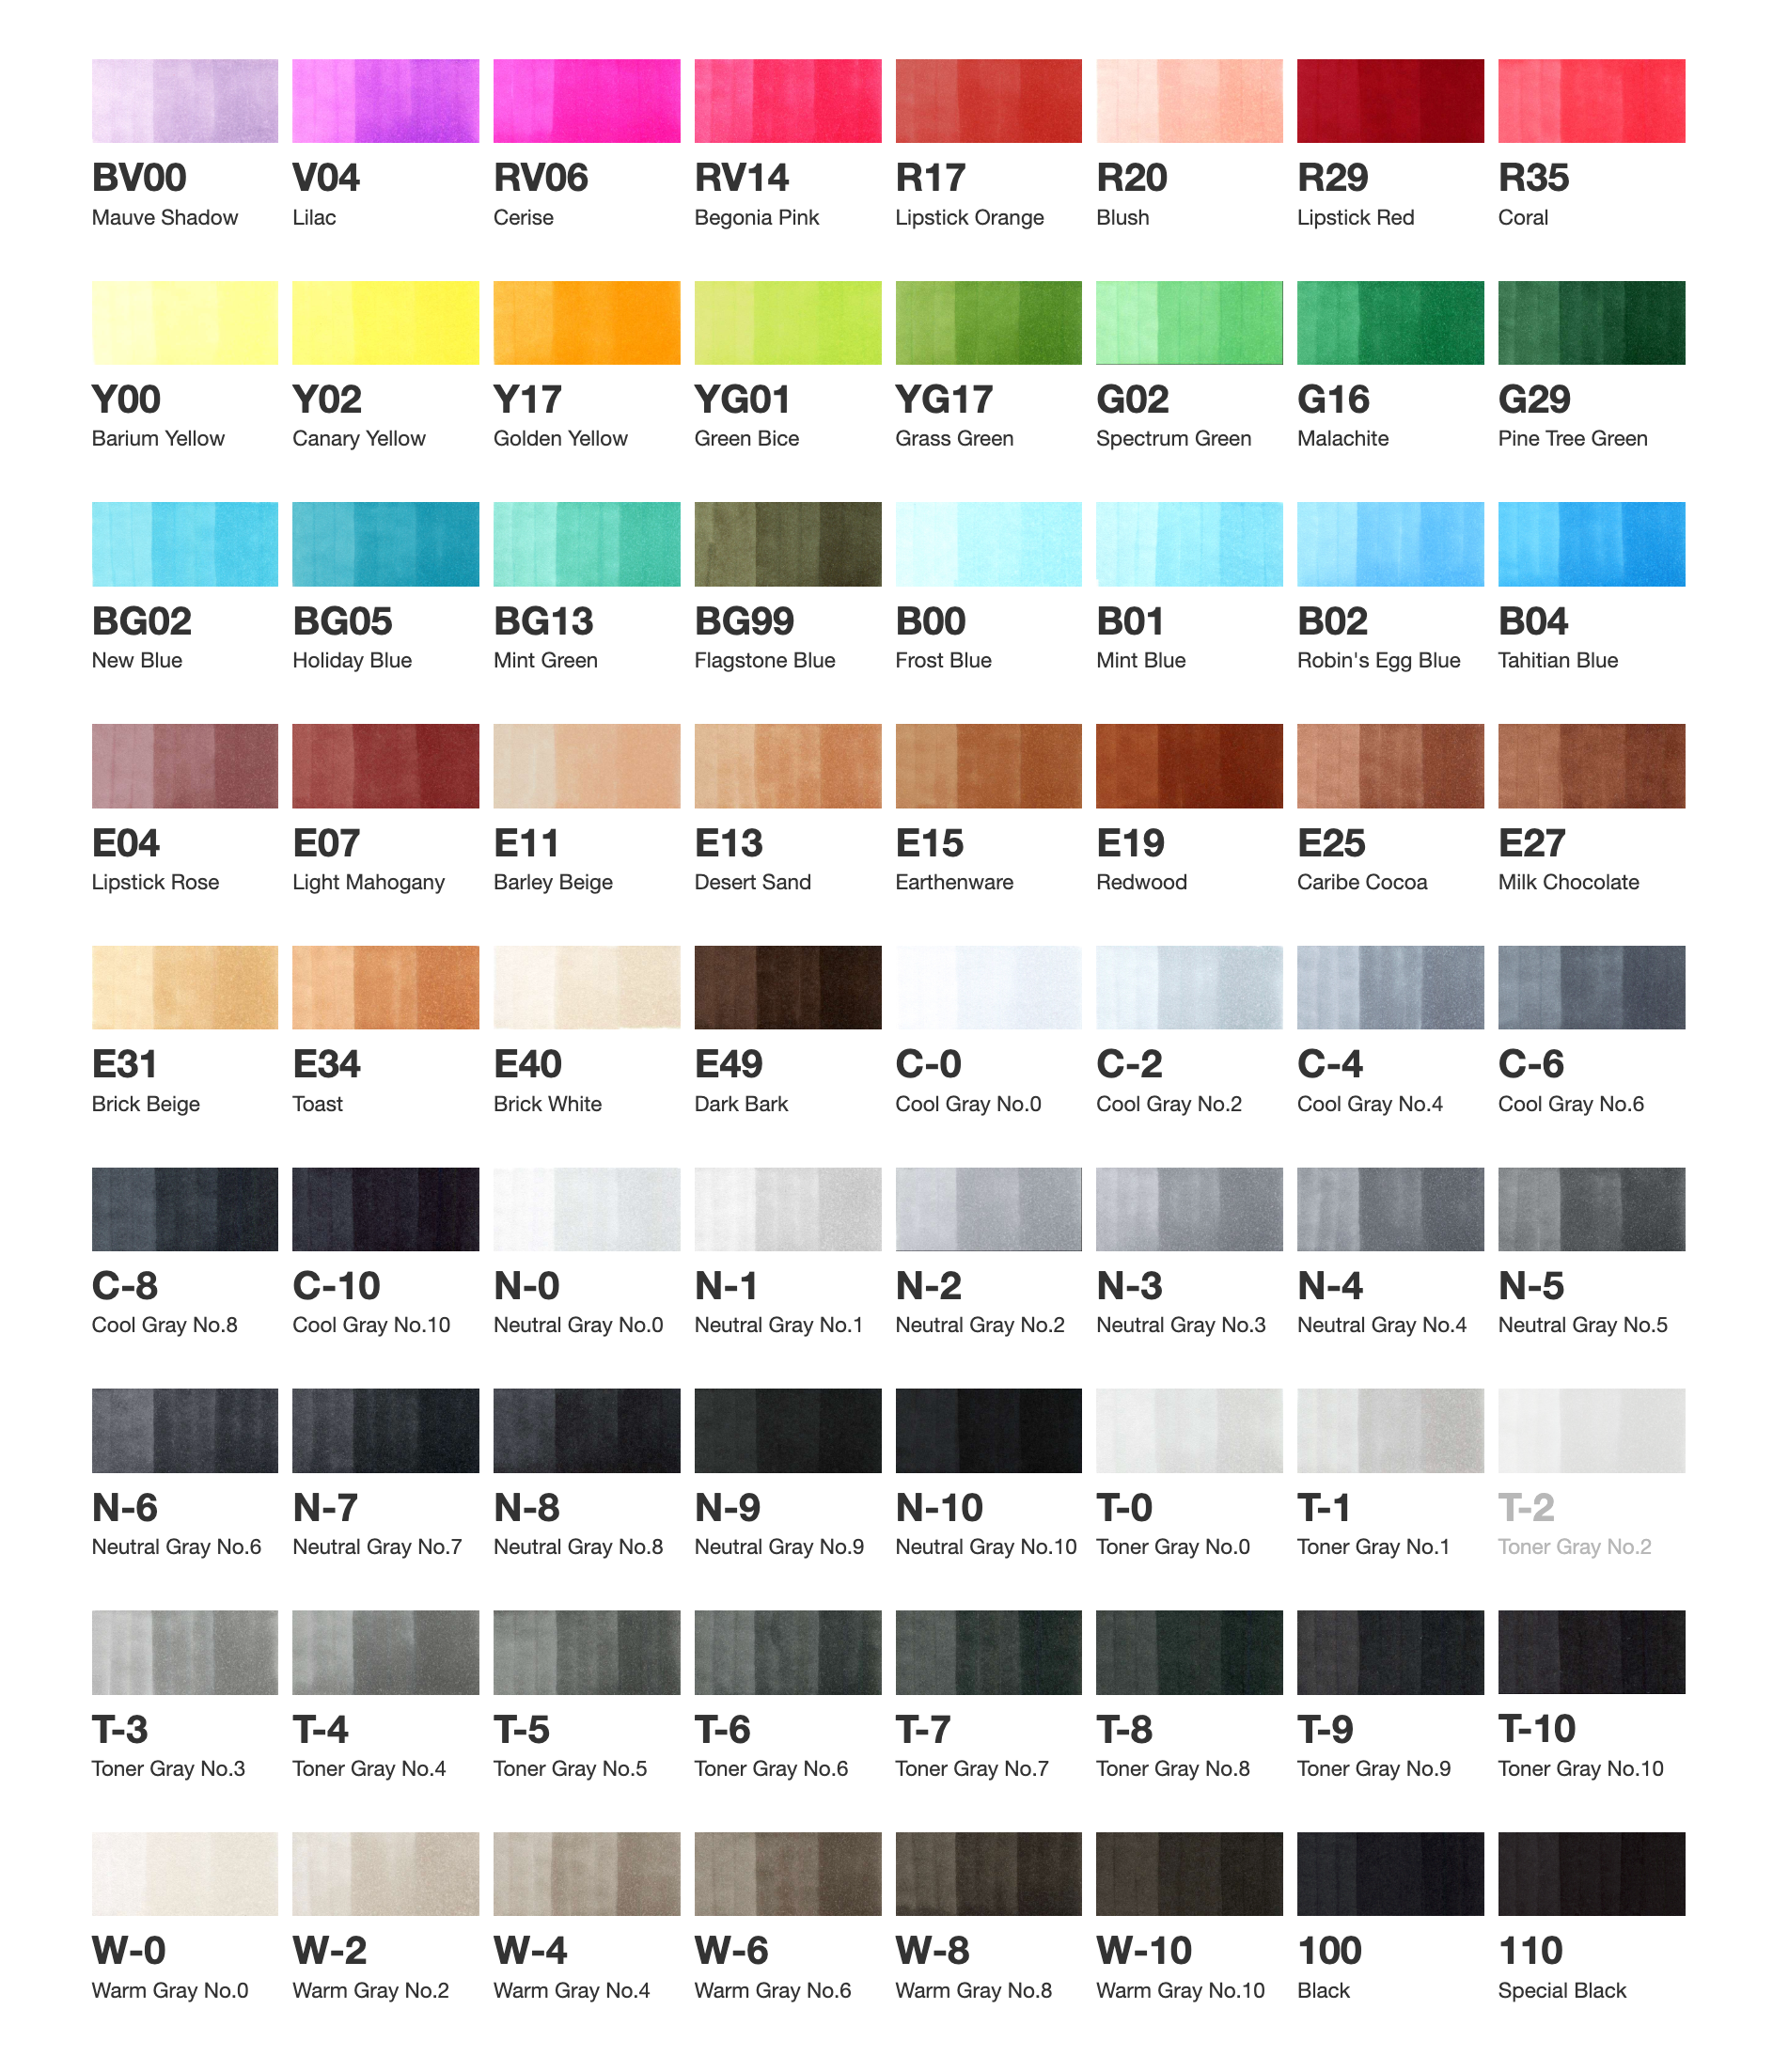 Copic Classic Marker Set, 72-Colors, Set B